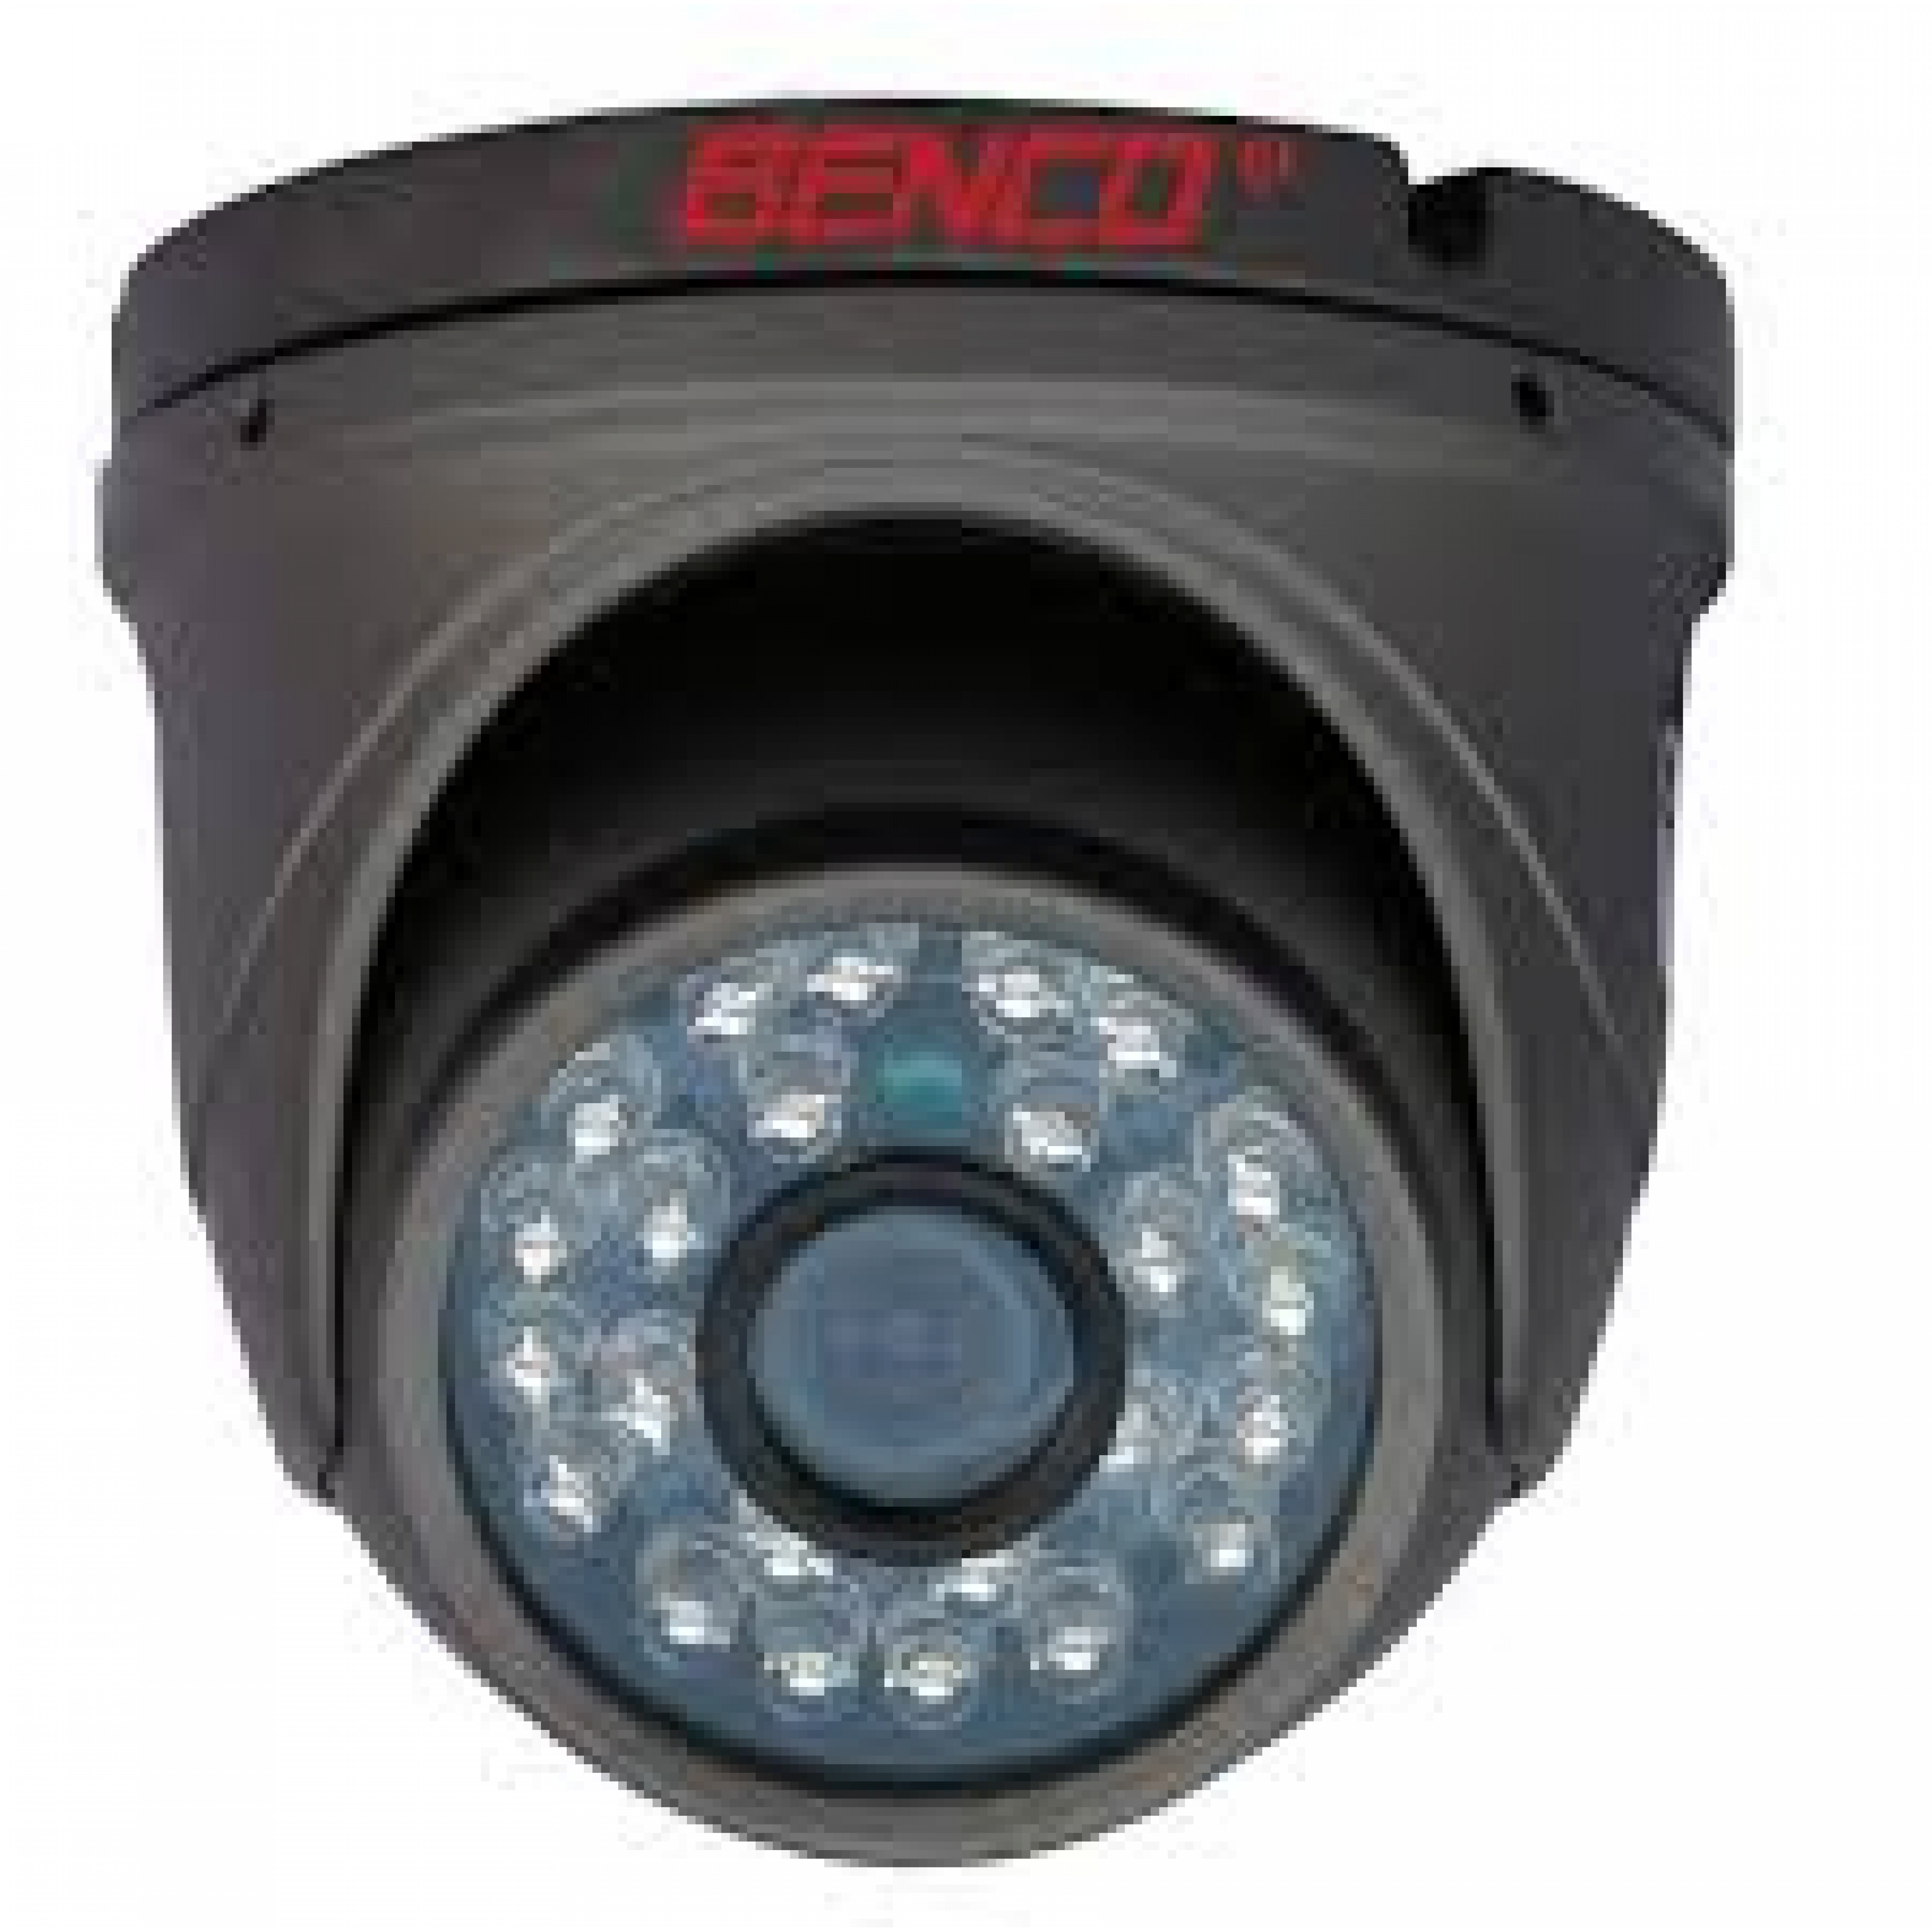 Camera bán cầu hồng ngoại Benco BEN-6122AHD